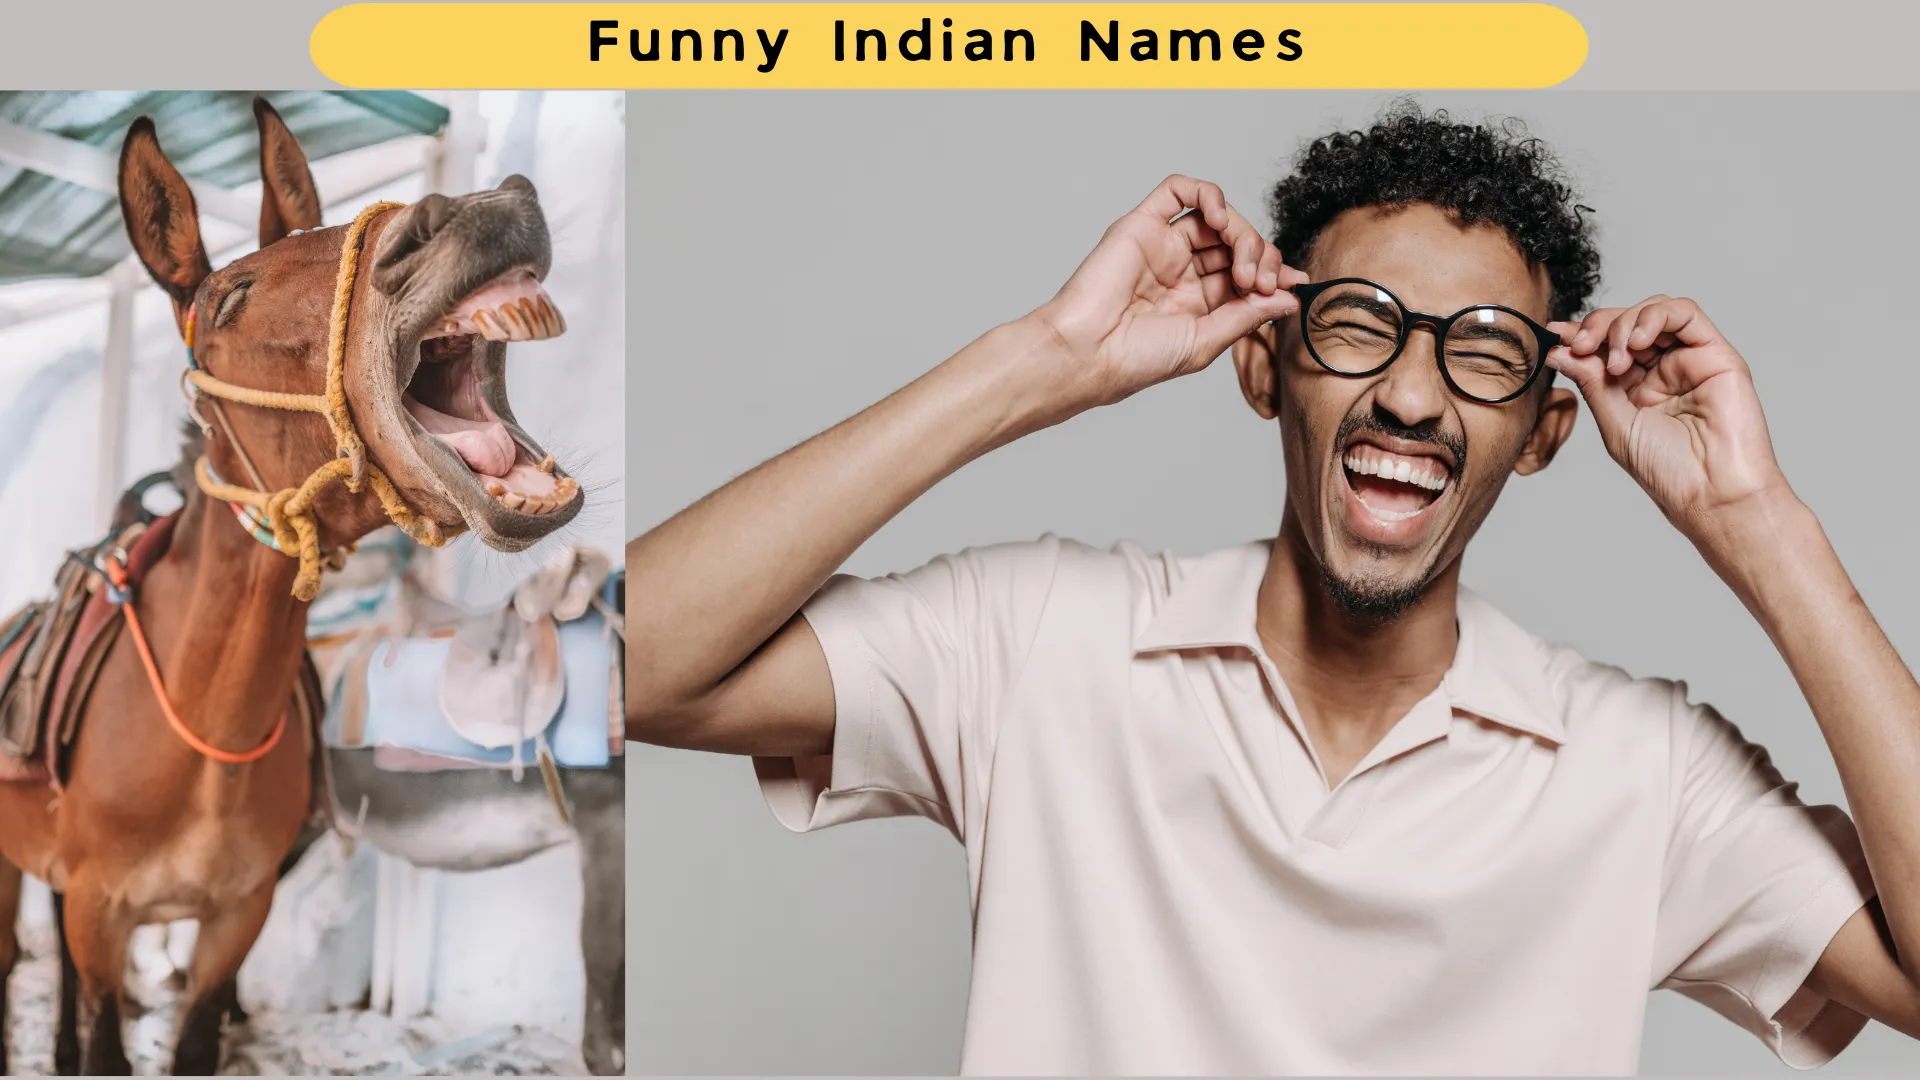 donkey smiling - Funny Indian Names